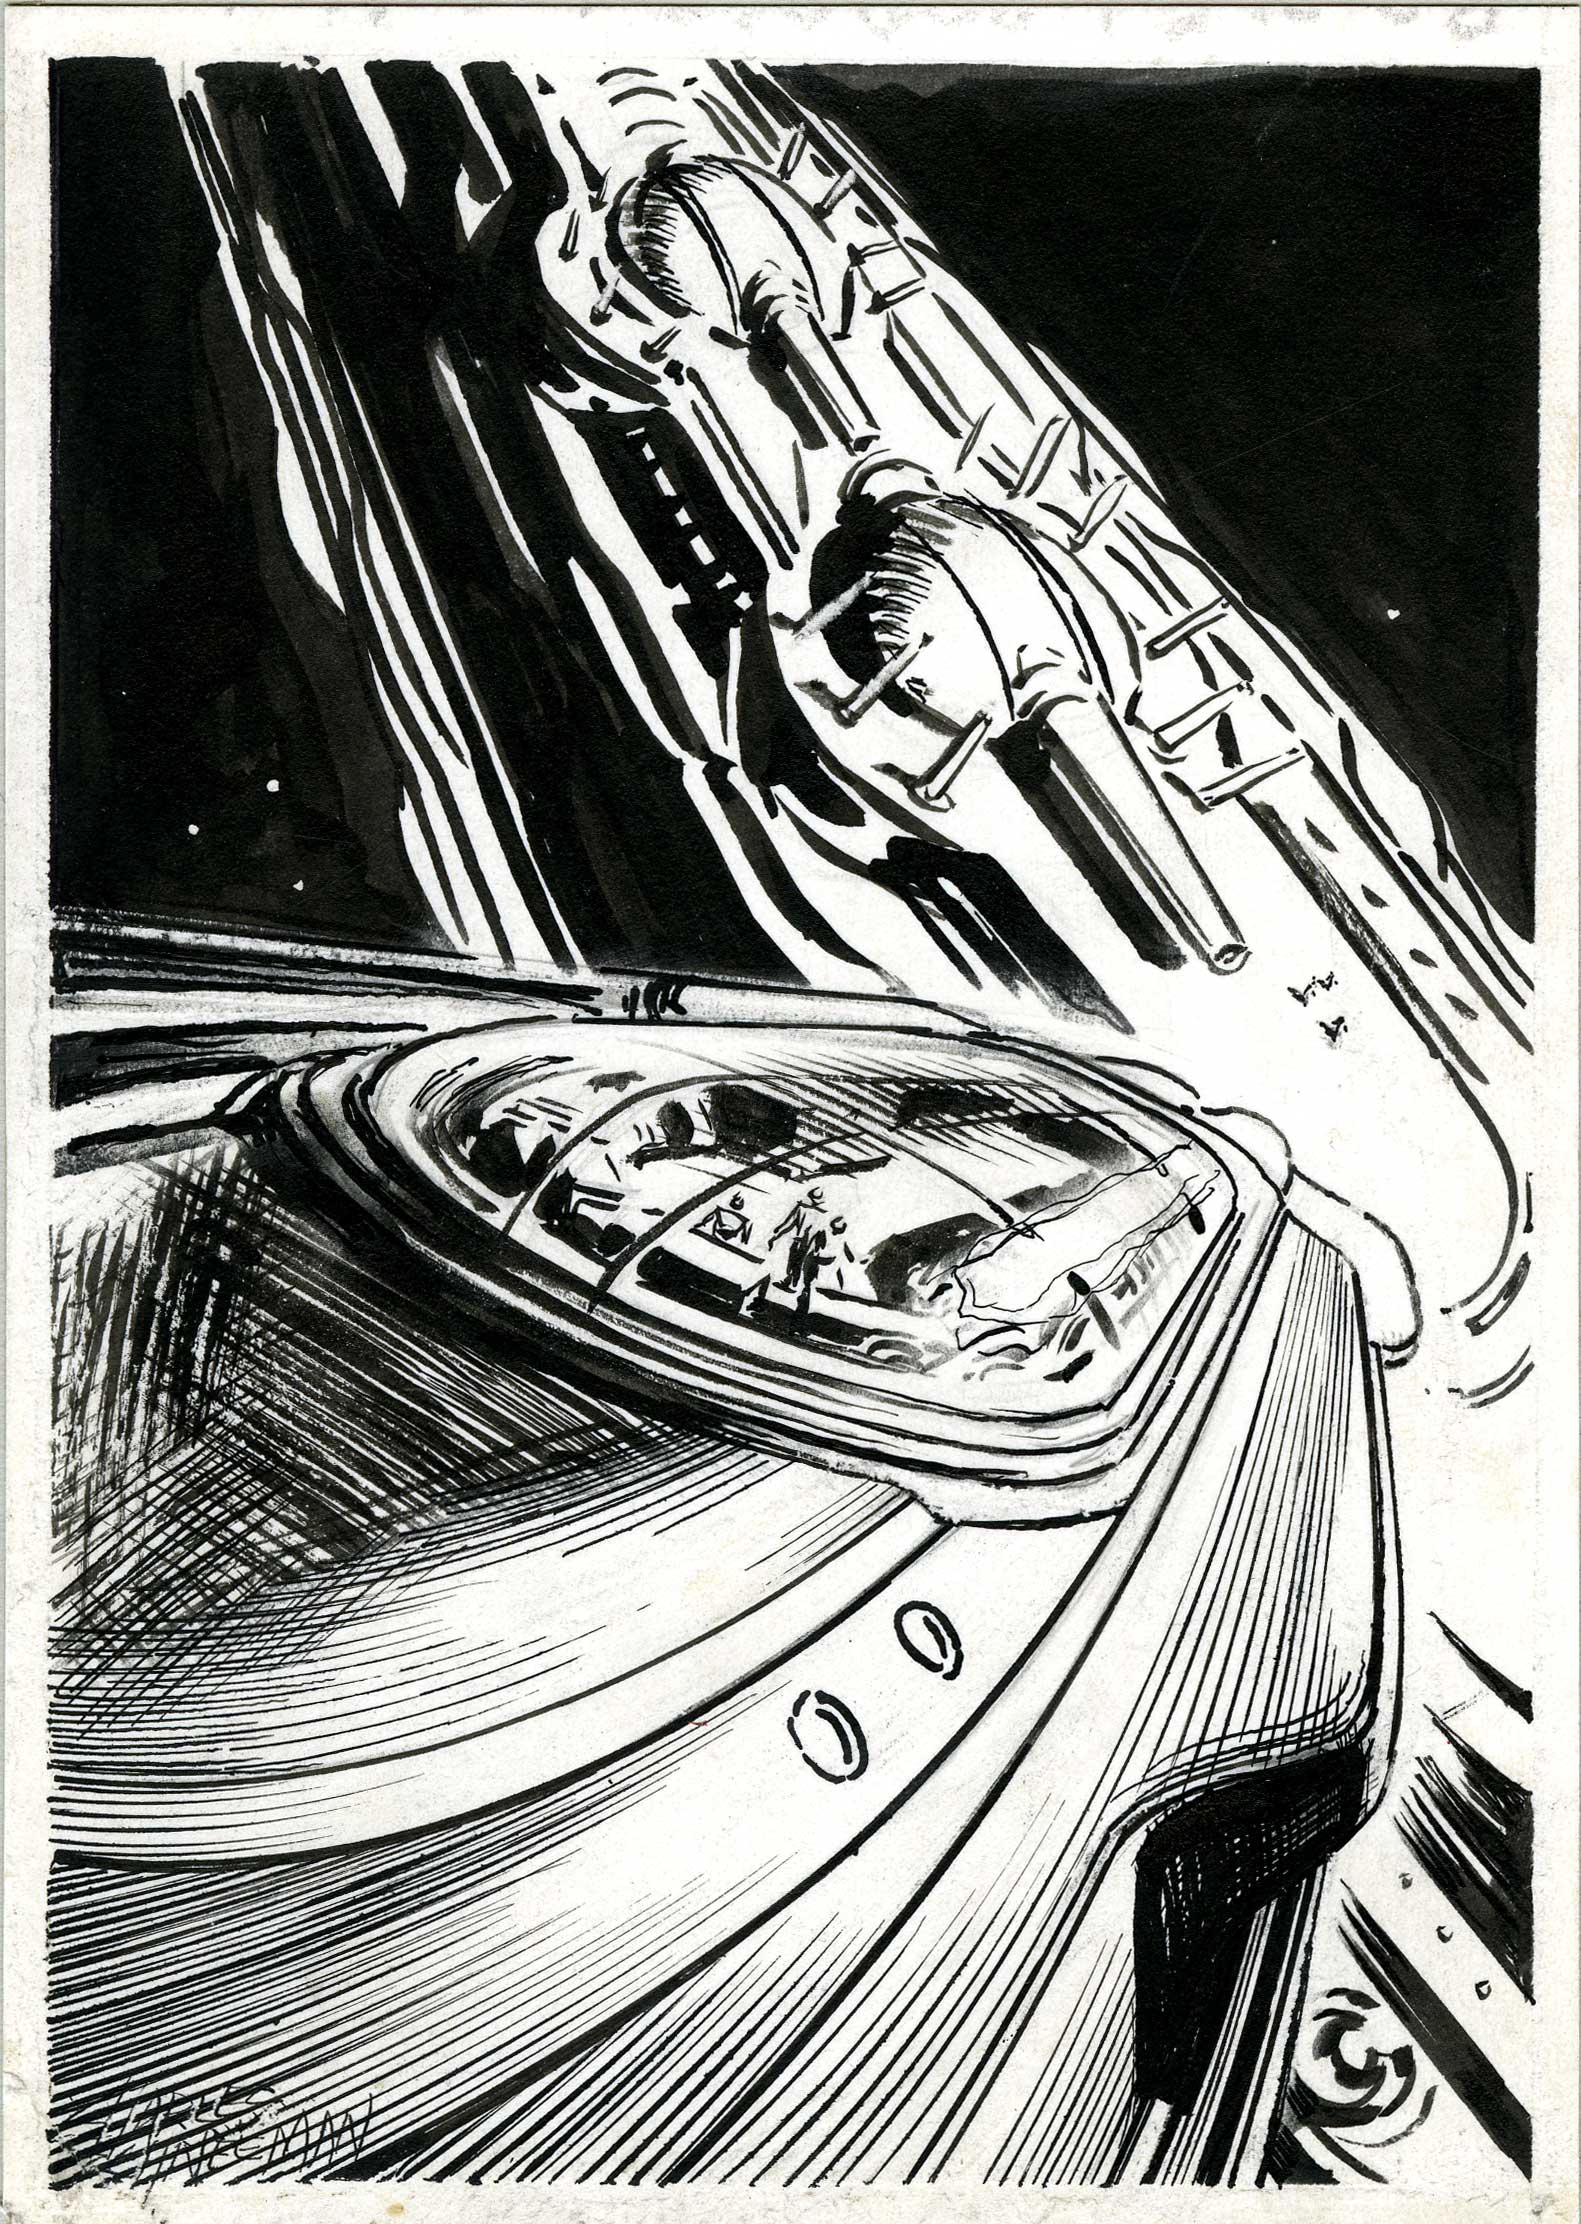 black and white illustration of sci-fi galactic battle scene